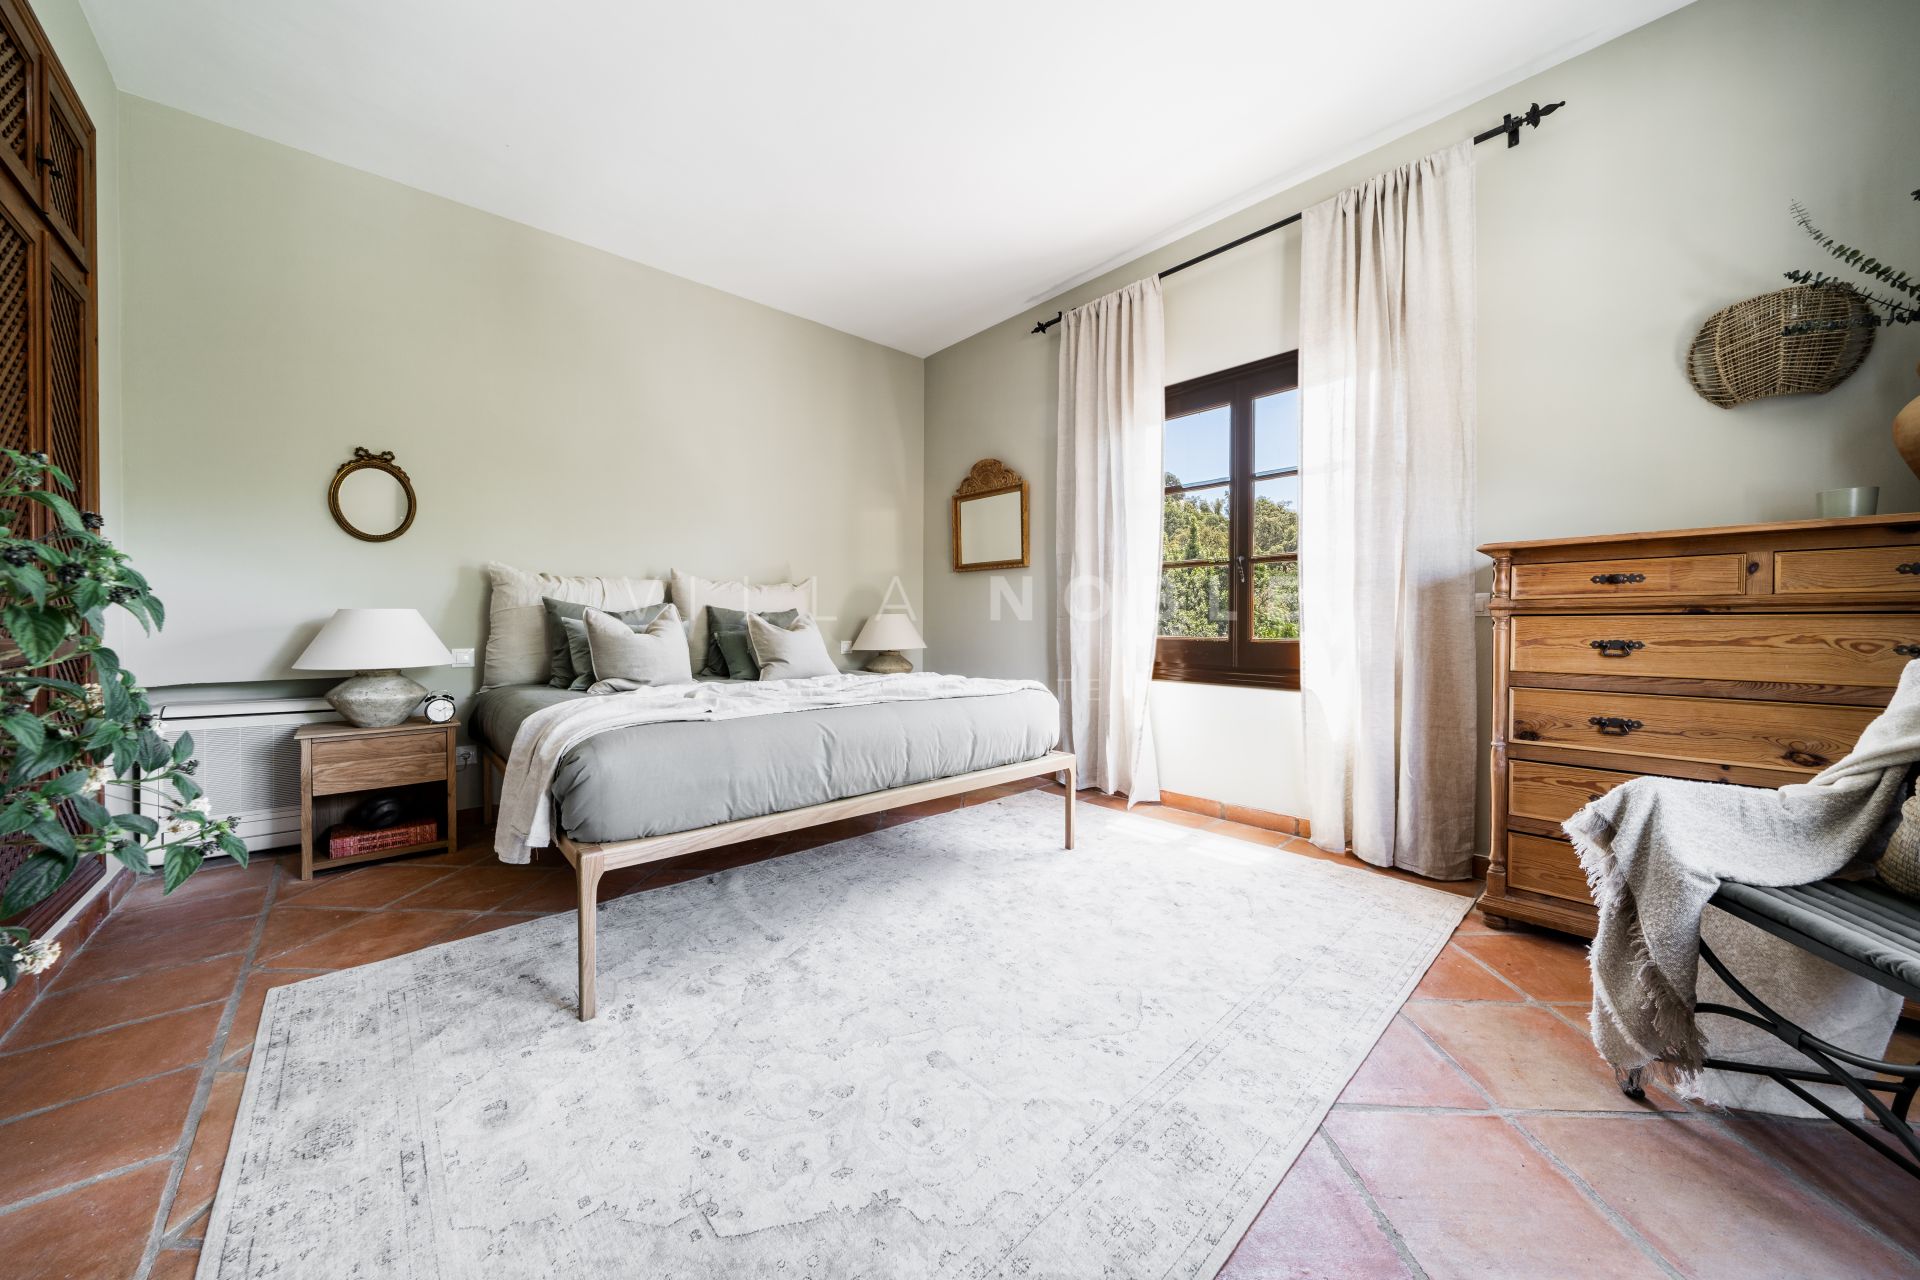 Charming 2 bedrooms townhouse situated in the most prestigious area of La Zagaleta, Benahavis